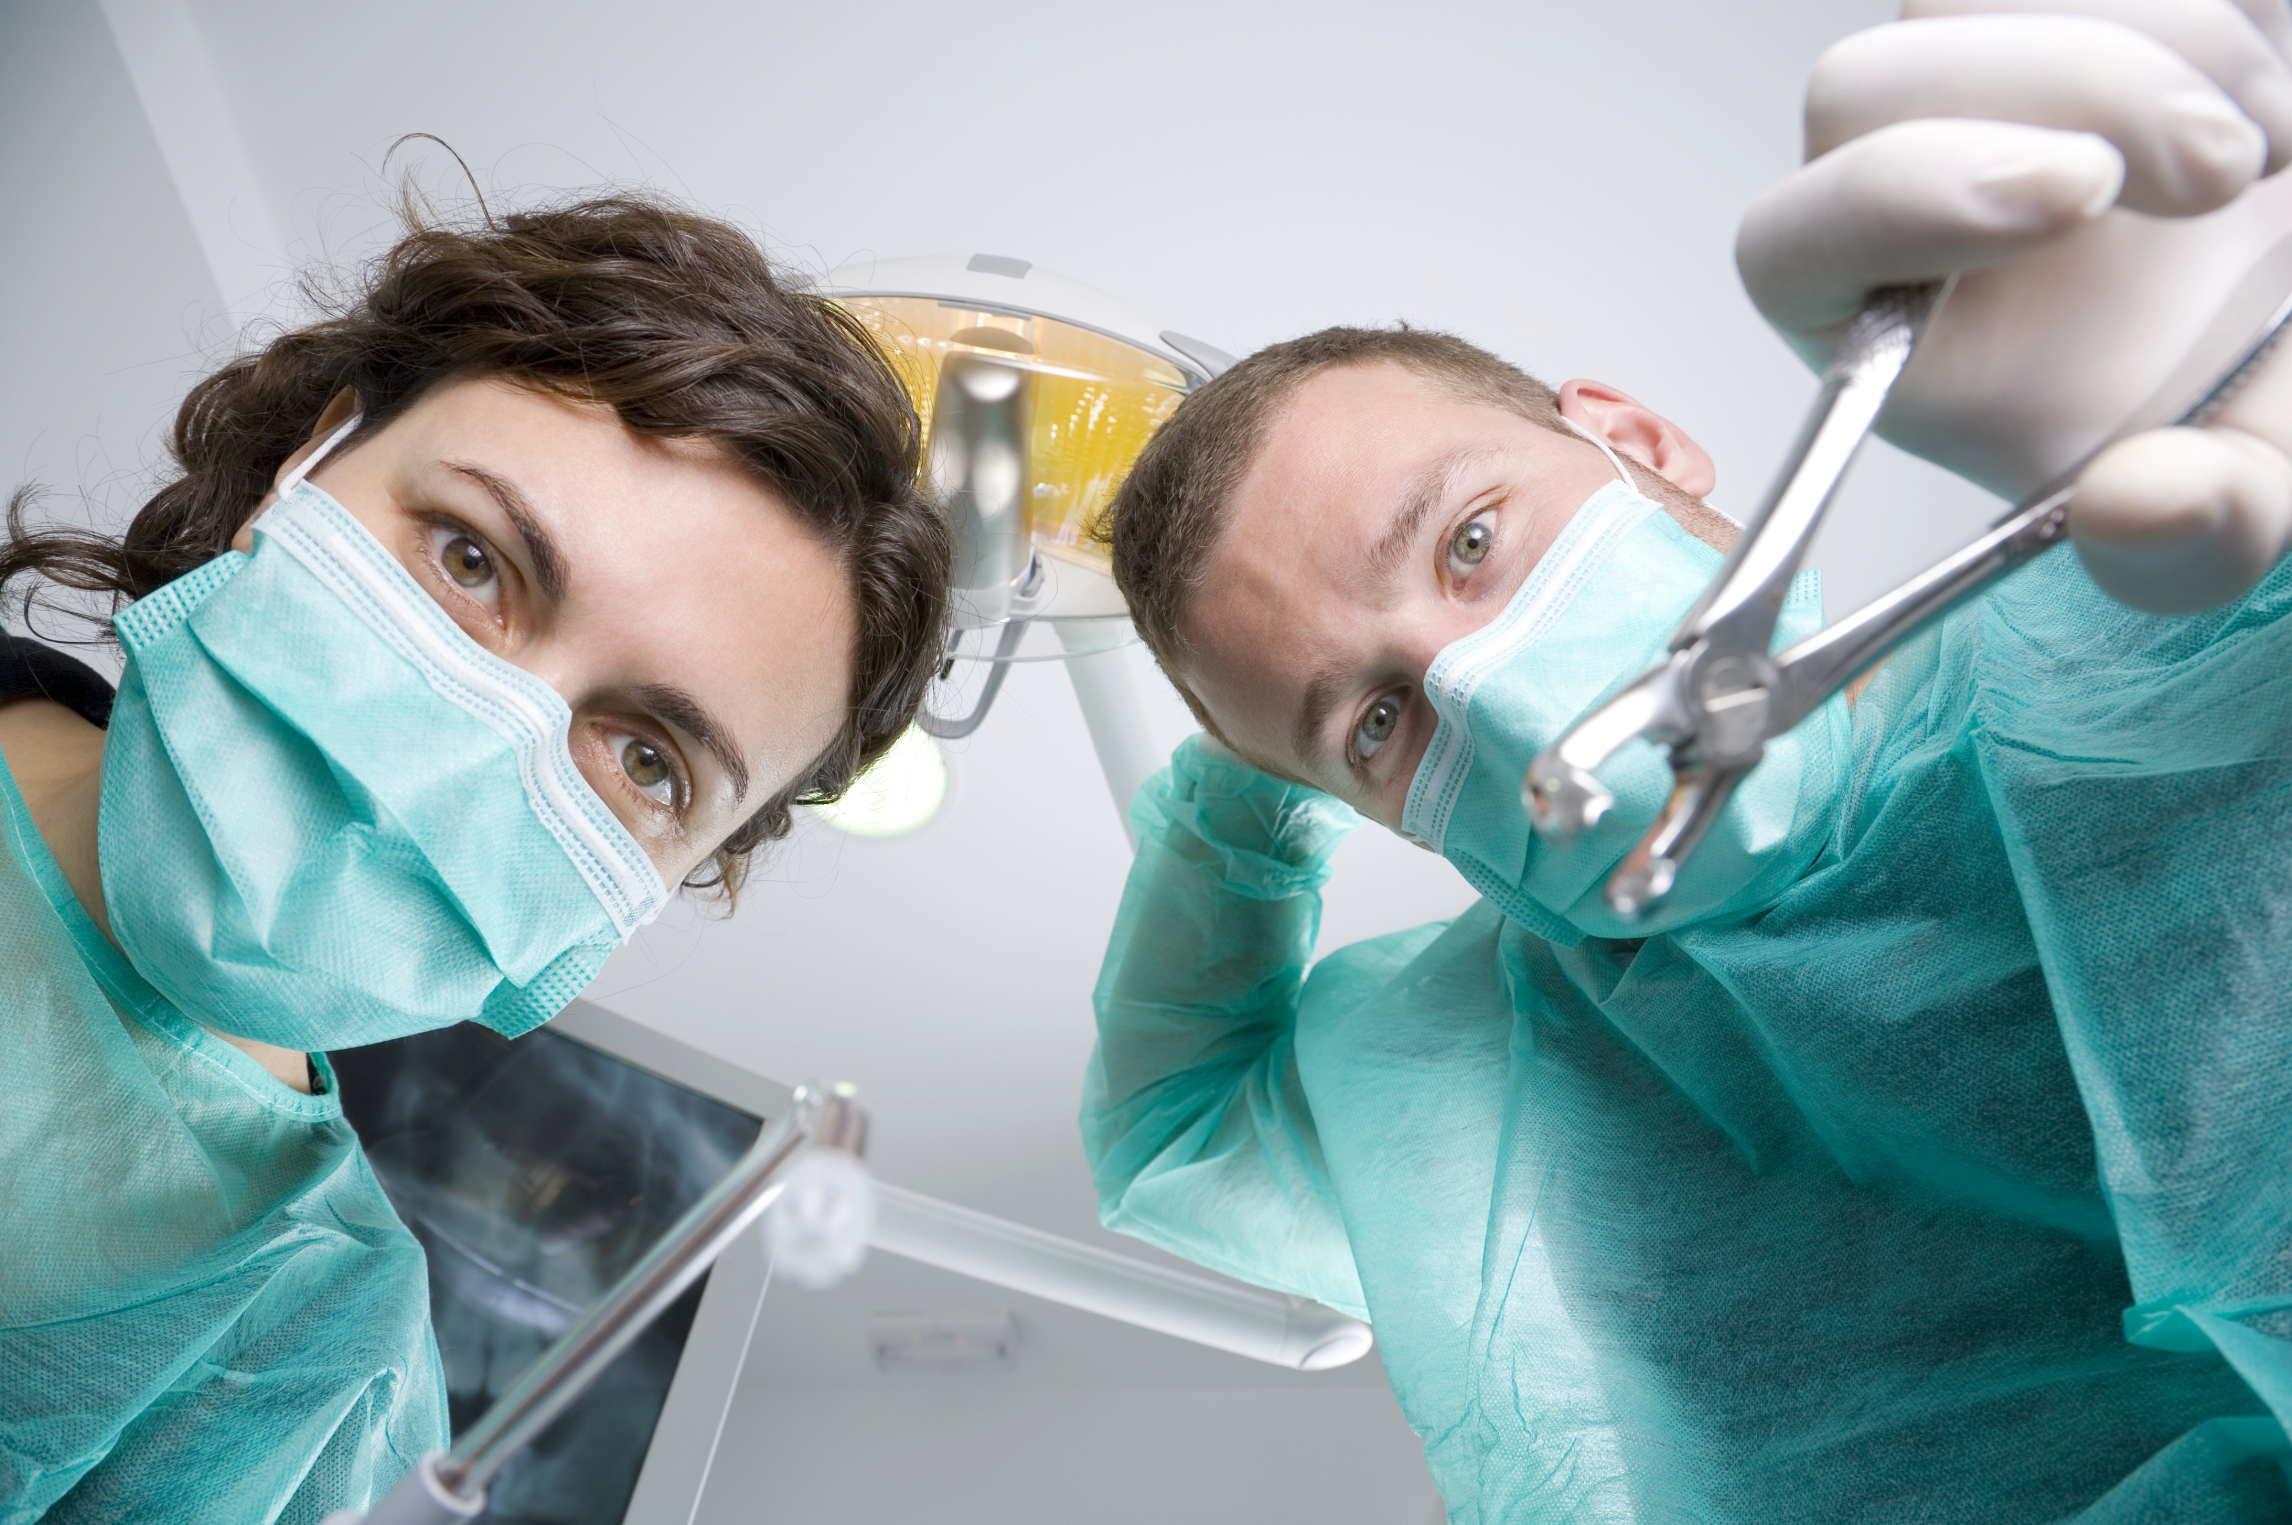 Tooth extraction. Хирургическая стоматология. Стоматологическая операция.